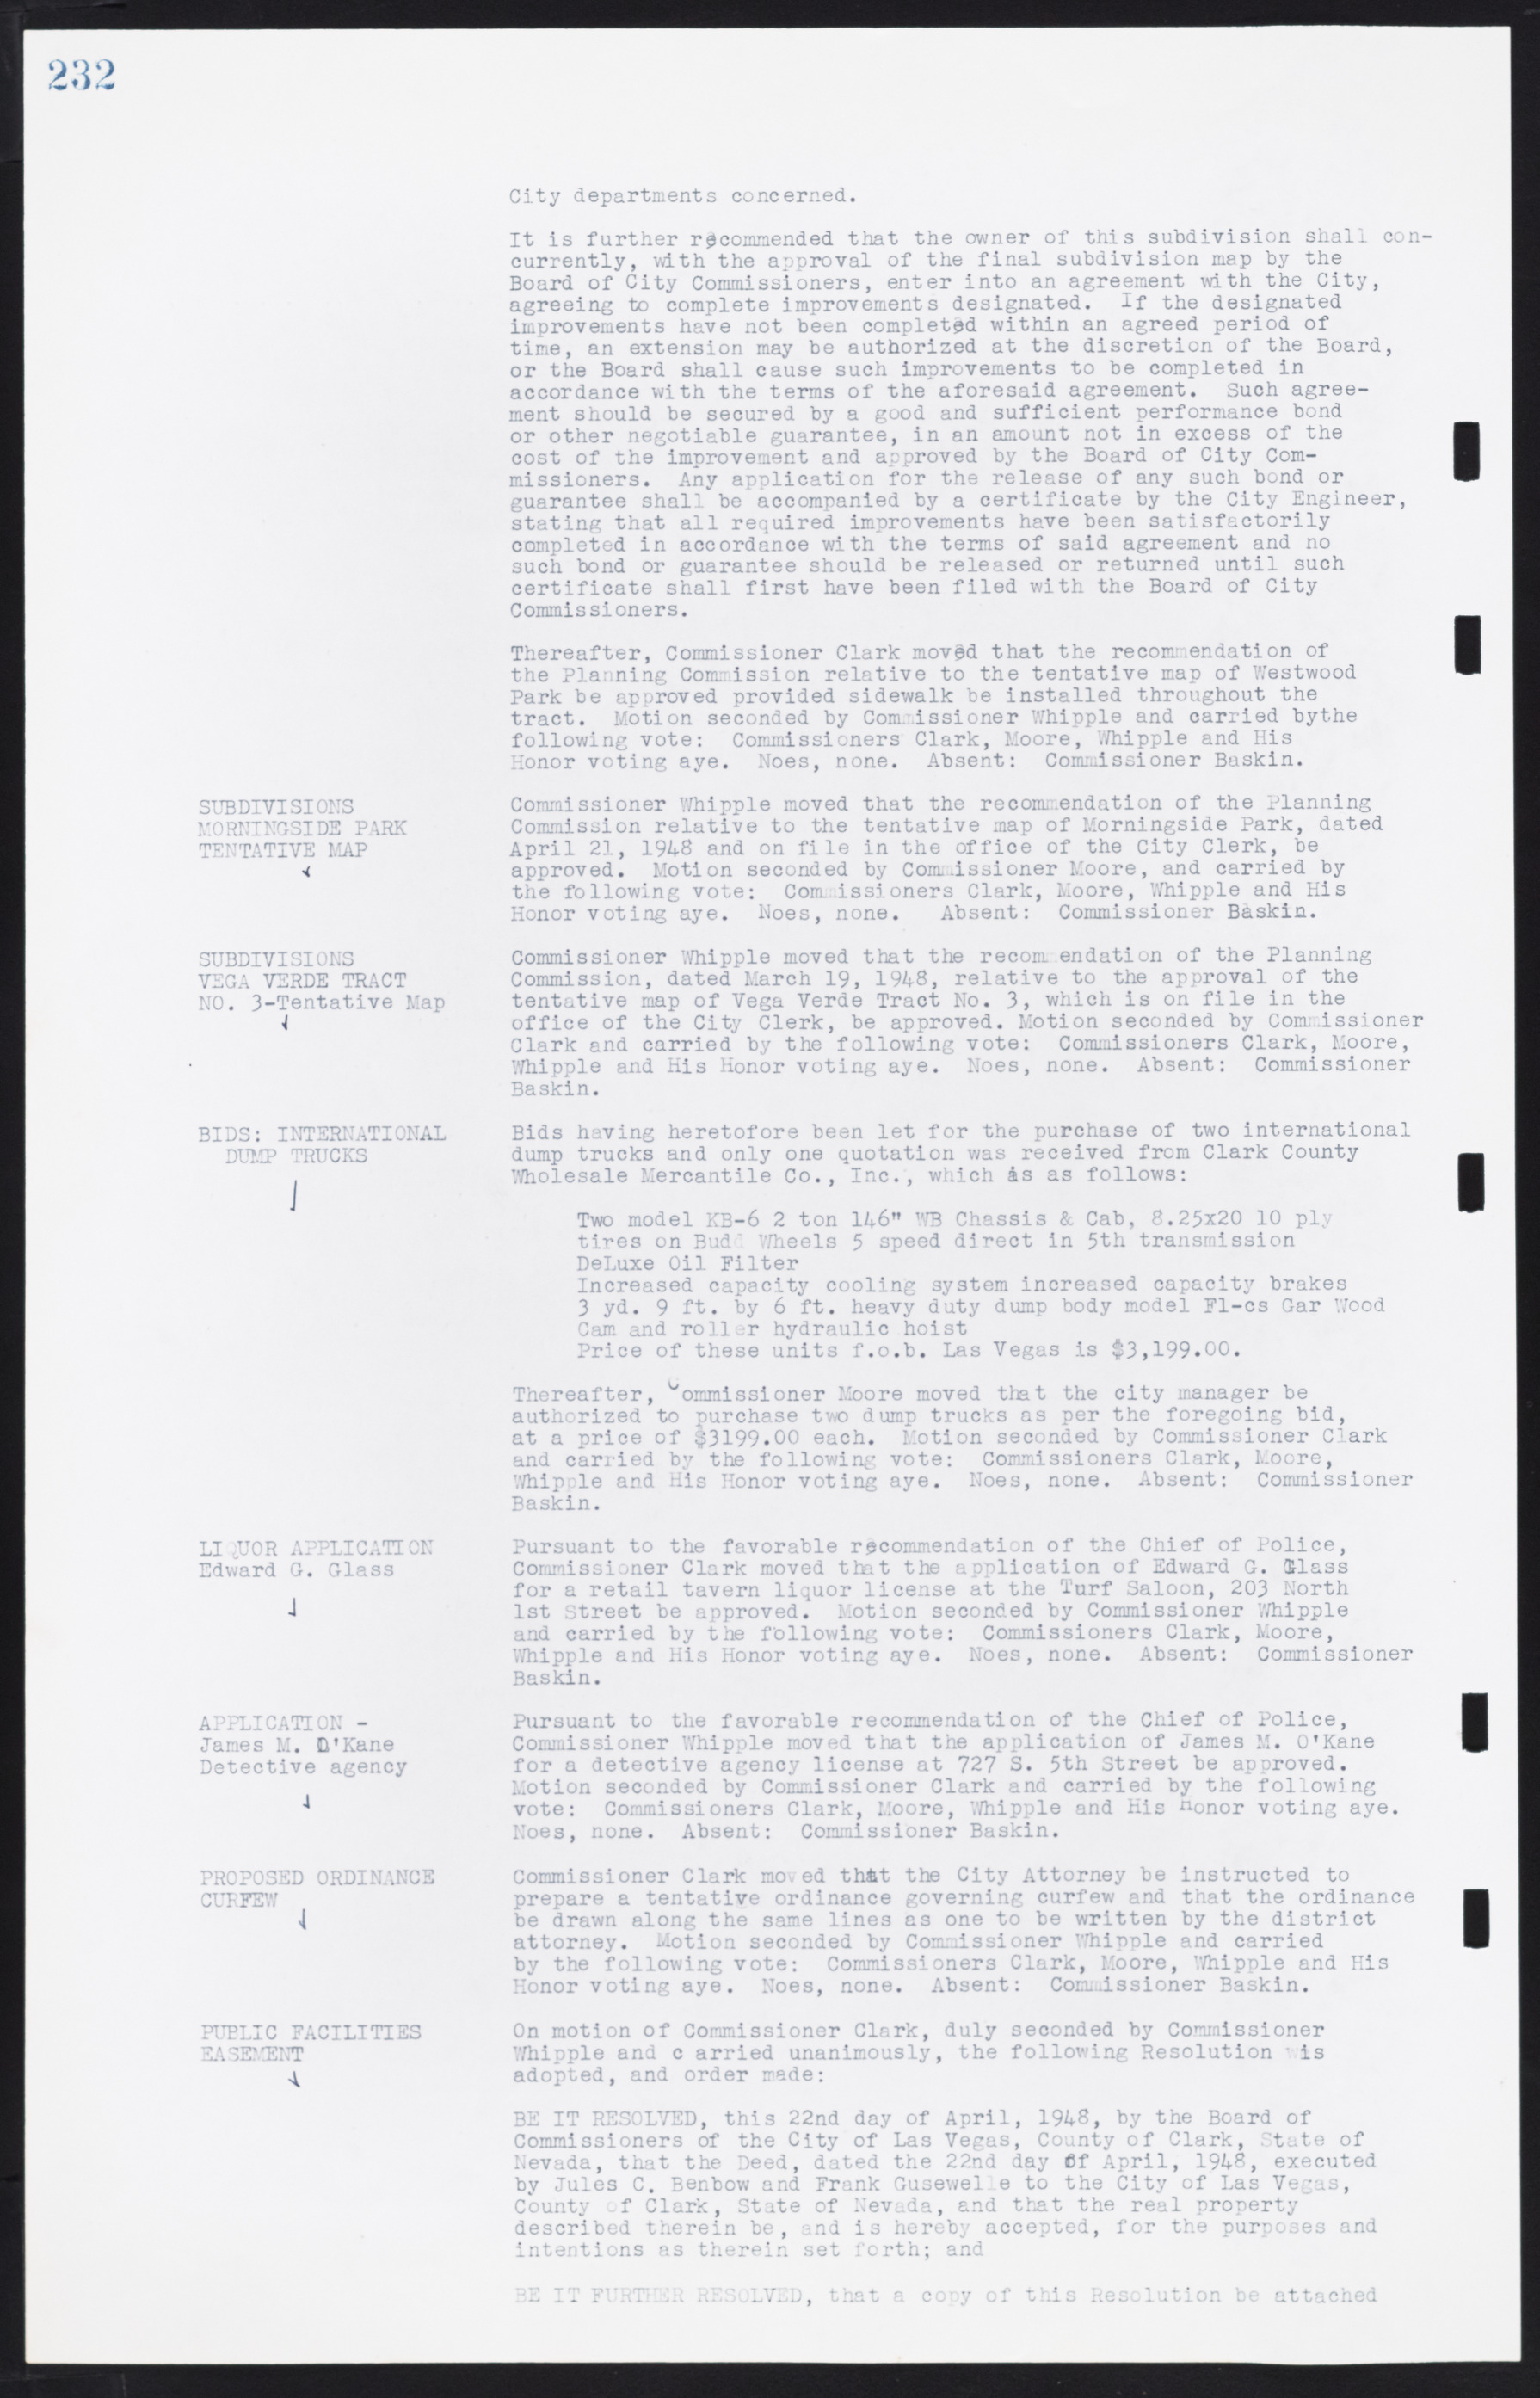 Las Vegas City Commission Minutes, January 7, 1947 to October 26, 1949, lvc000006-254